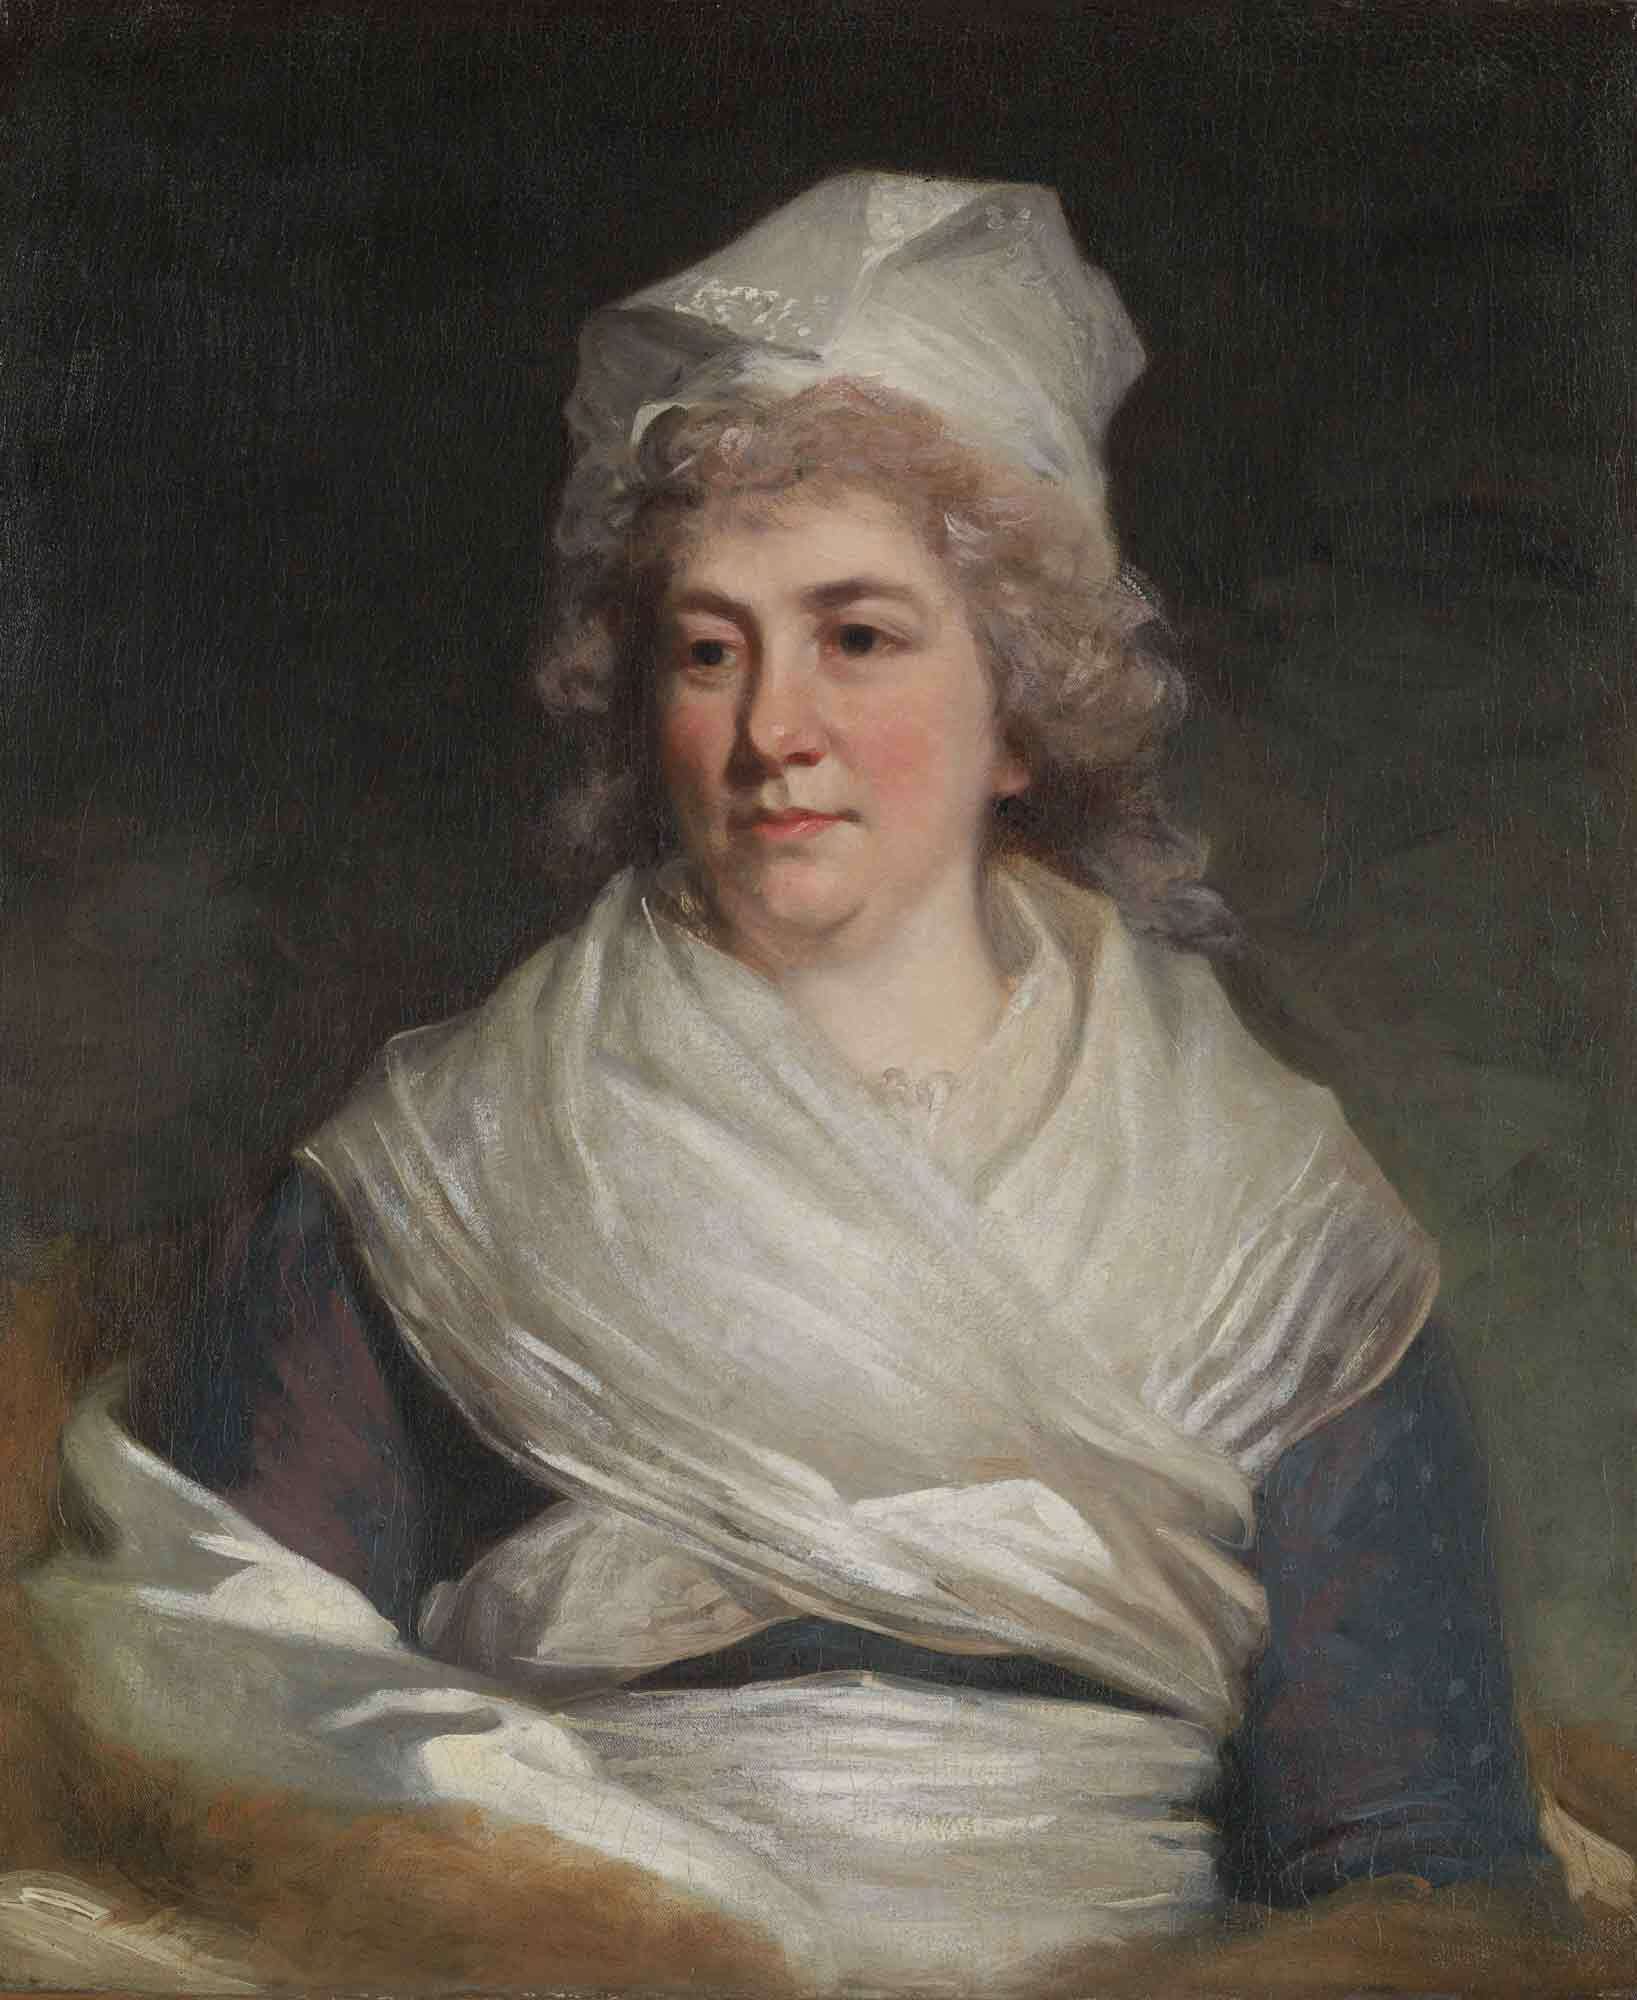 A portrait of Benjamin Franklin's daughter, Sarah (Sally) Franklin Bache.